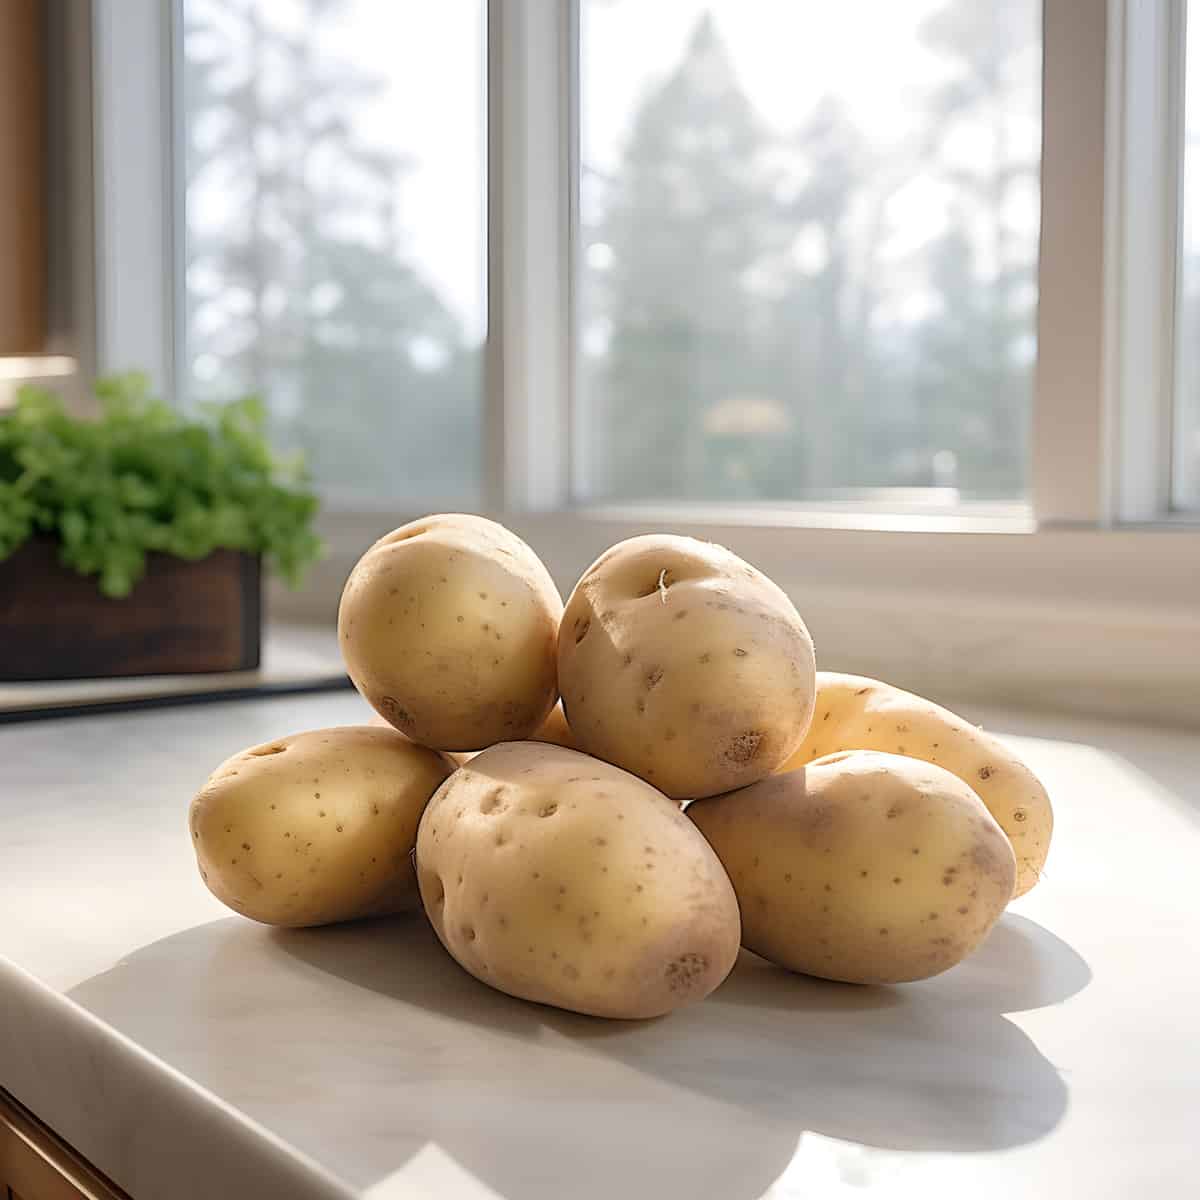 Agata Potatoes on a kitchen counter